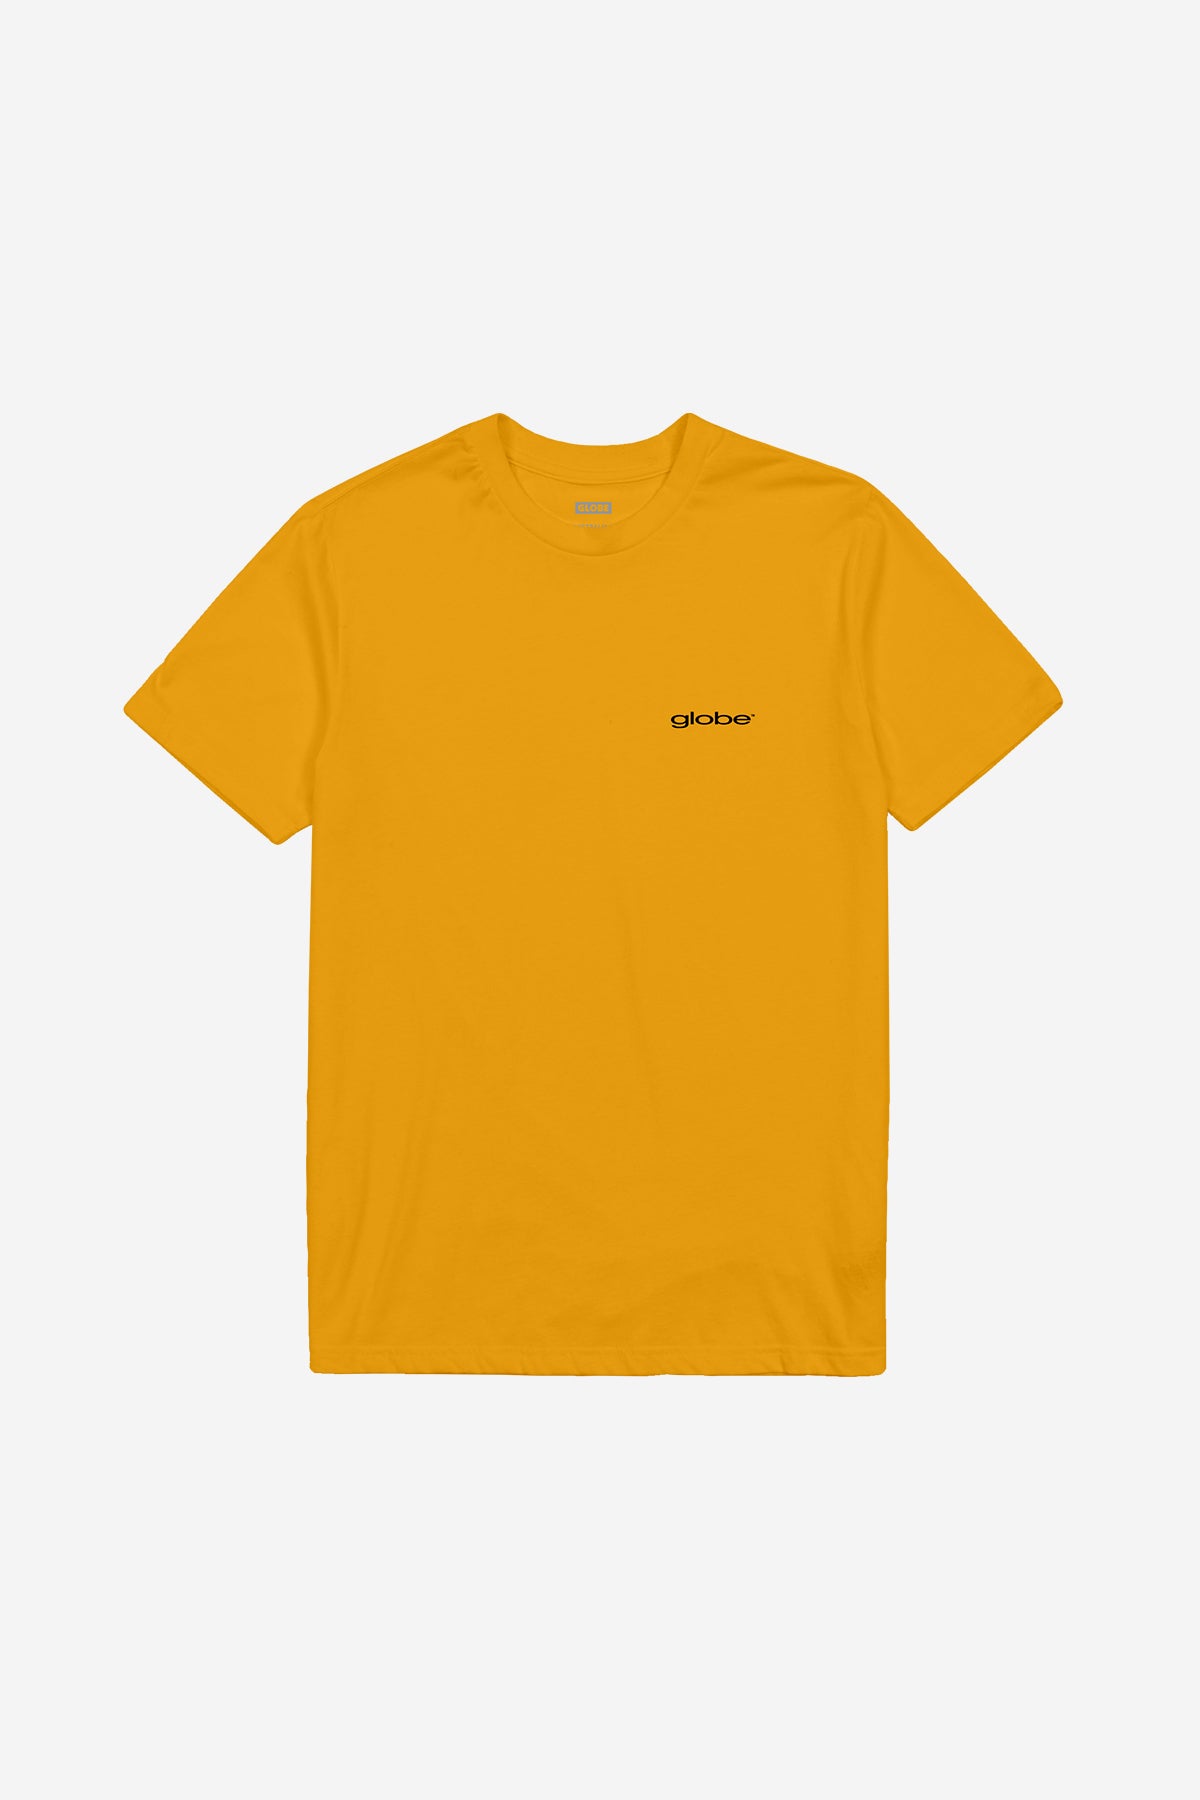 Globe - T-shirt oval - Citrus